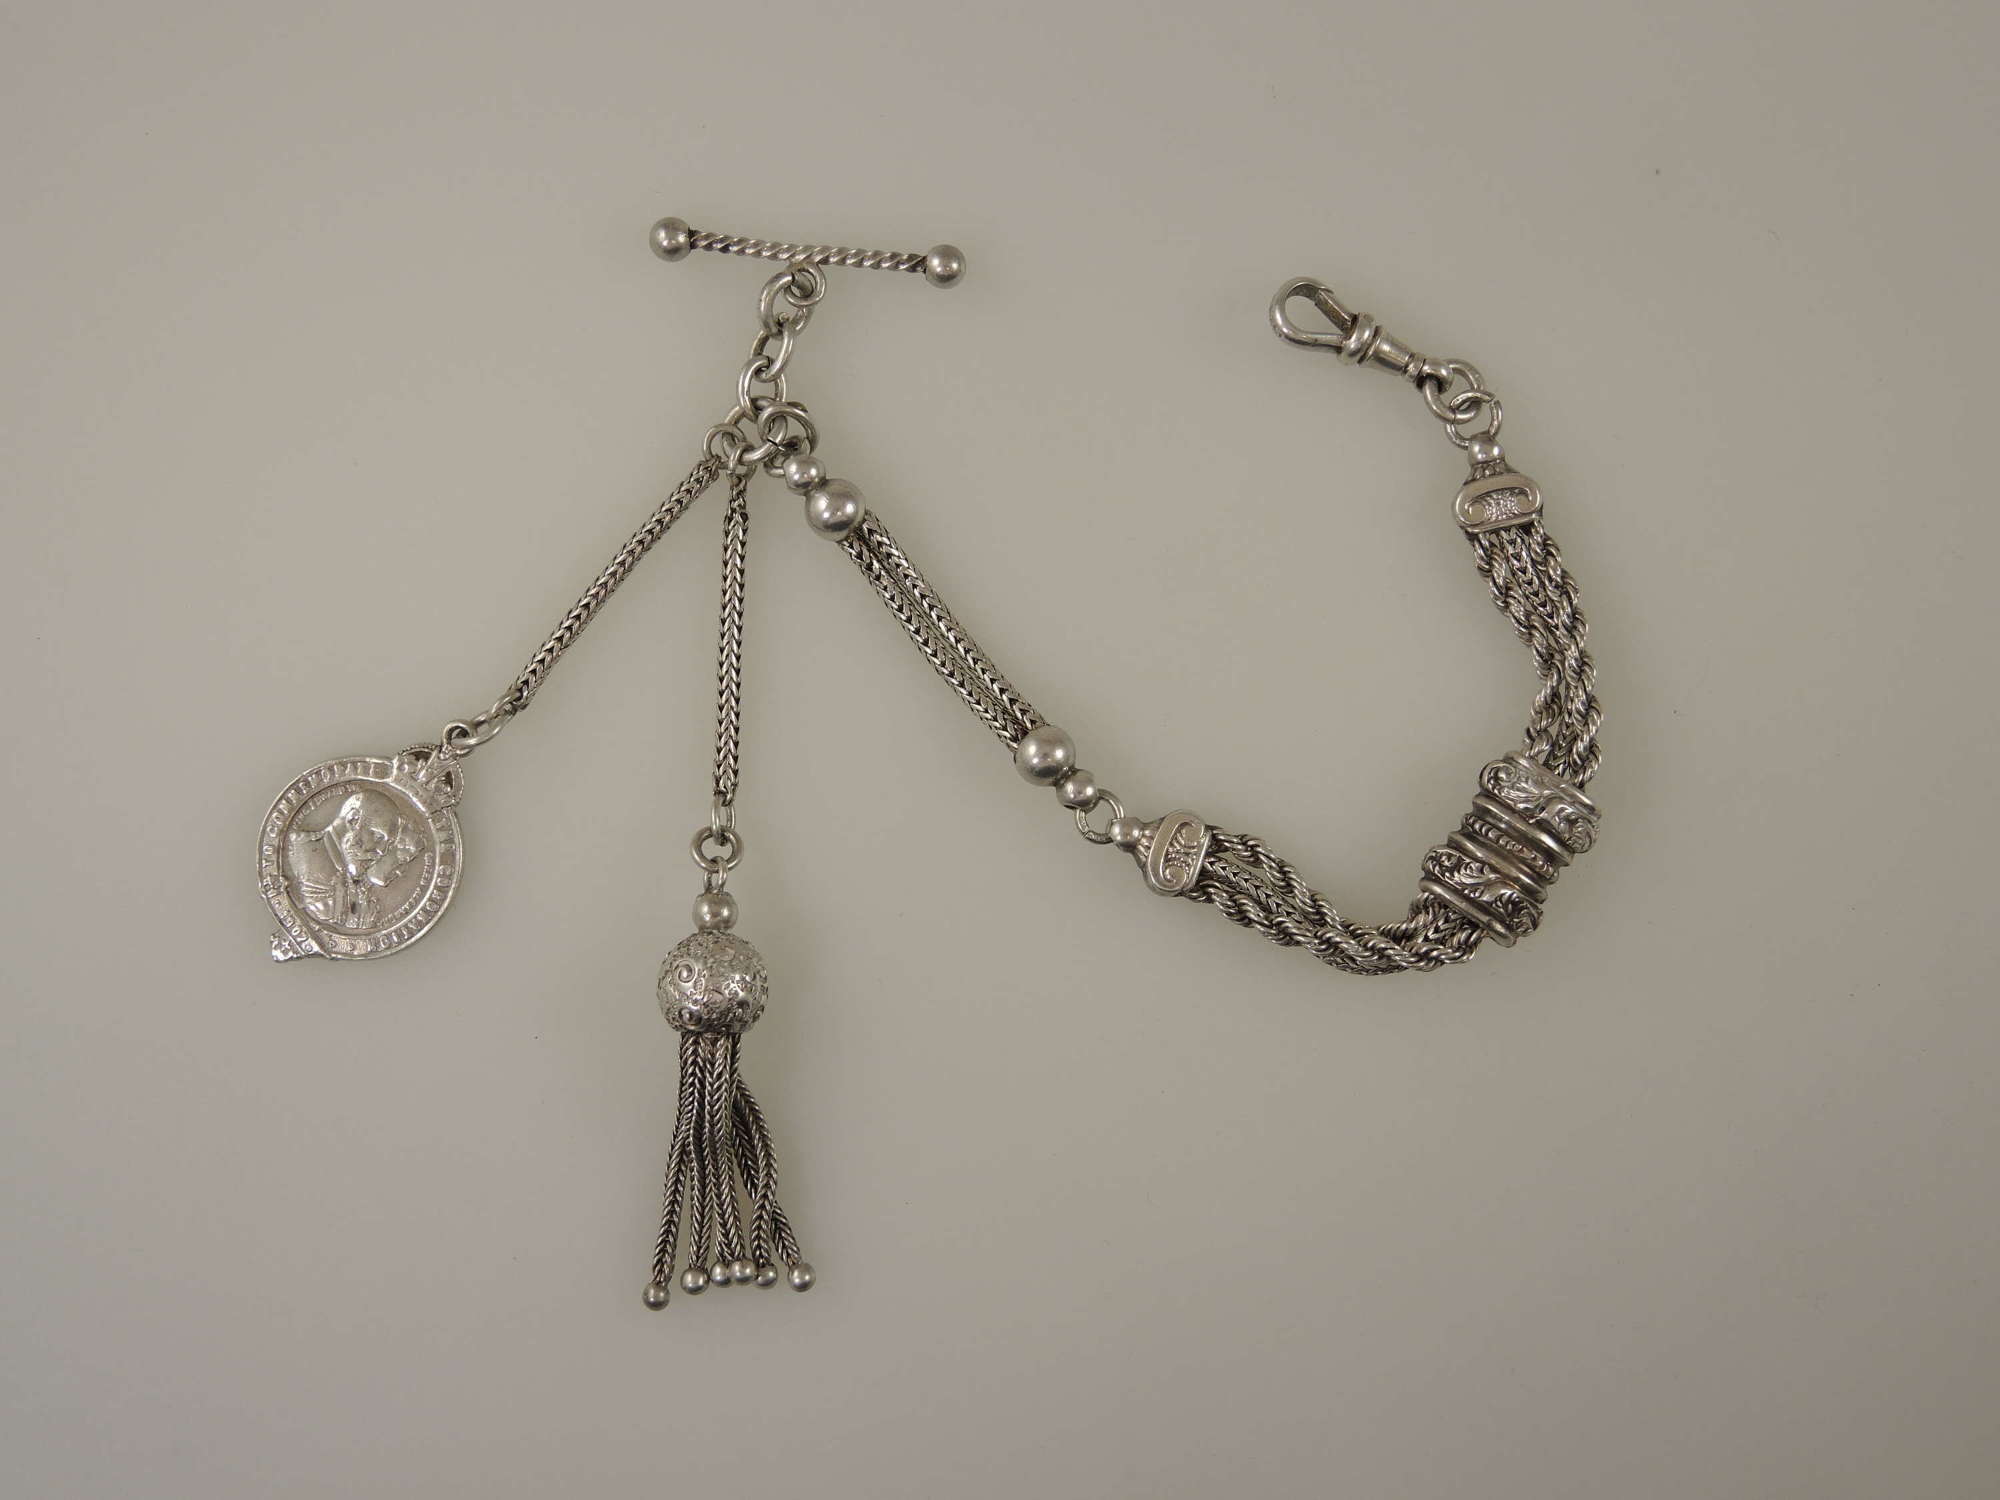 Edwardian silver pocket watch chain with Coronation fob c1902